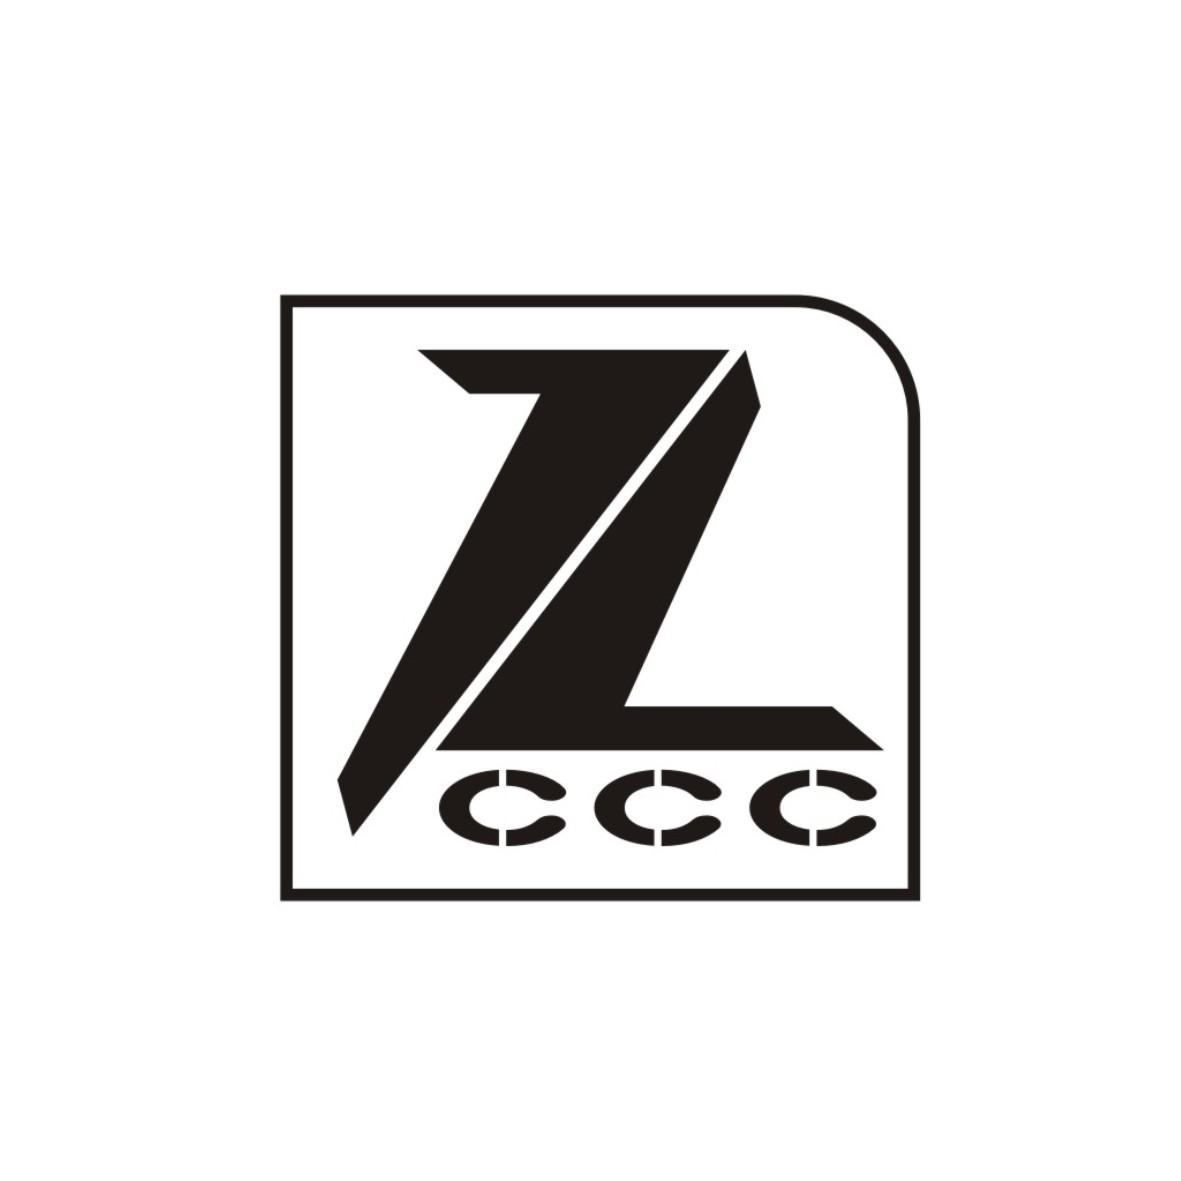 zl ccc 商标公告